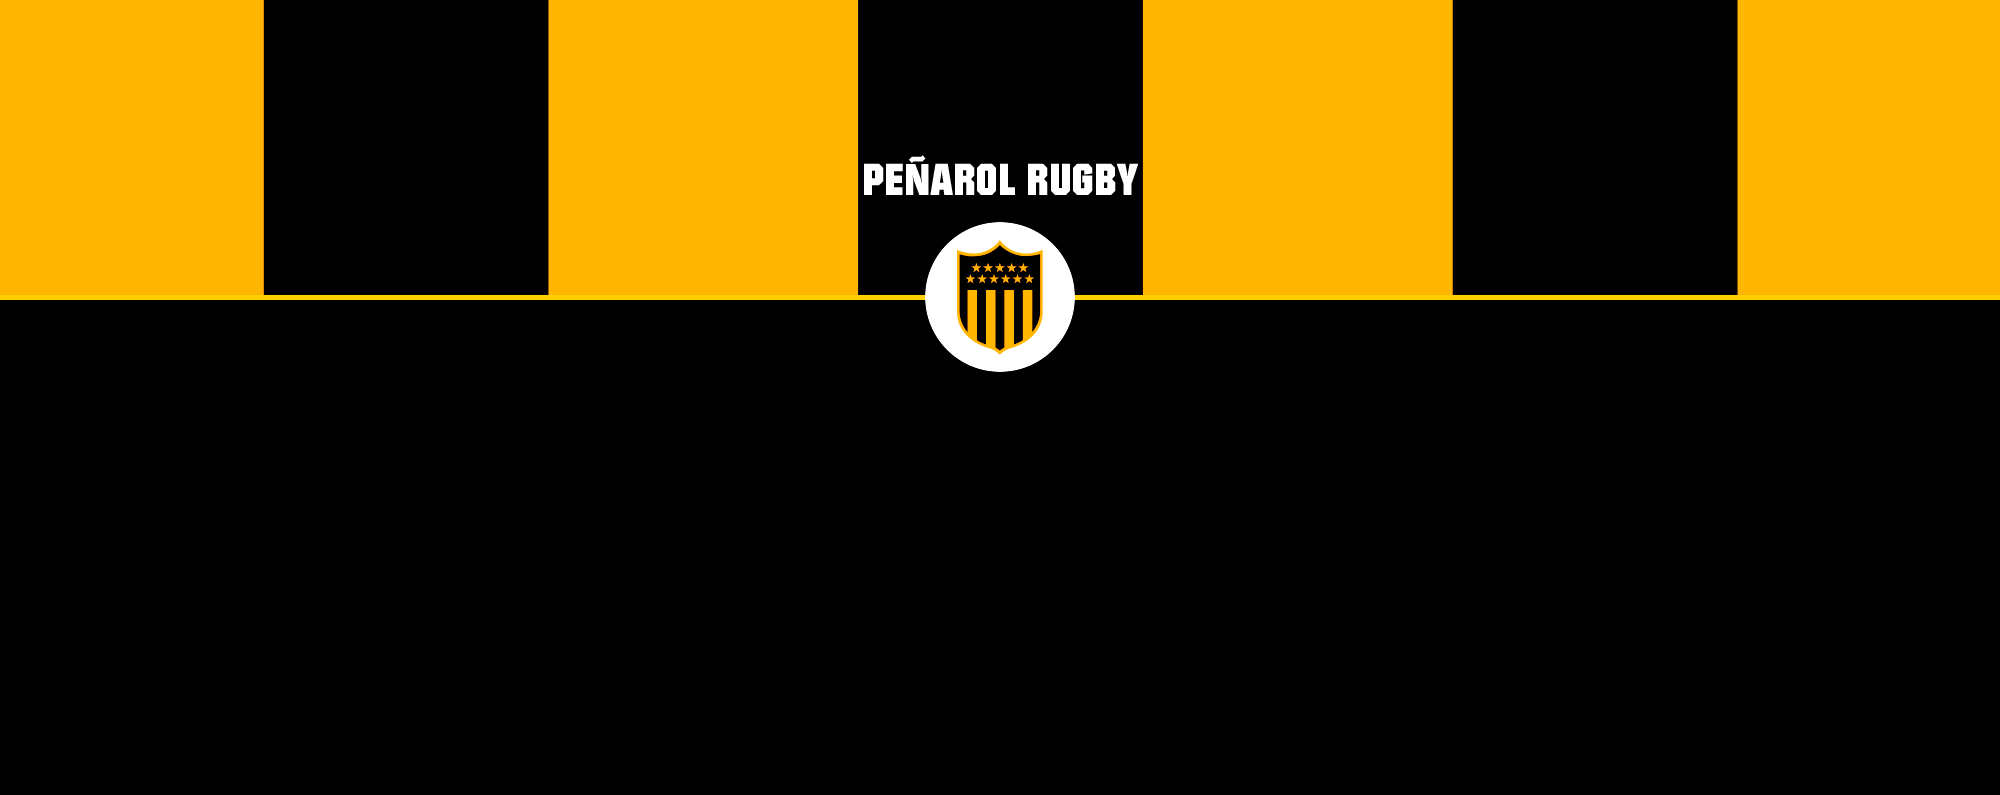 Peñarol Rugby banner